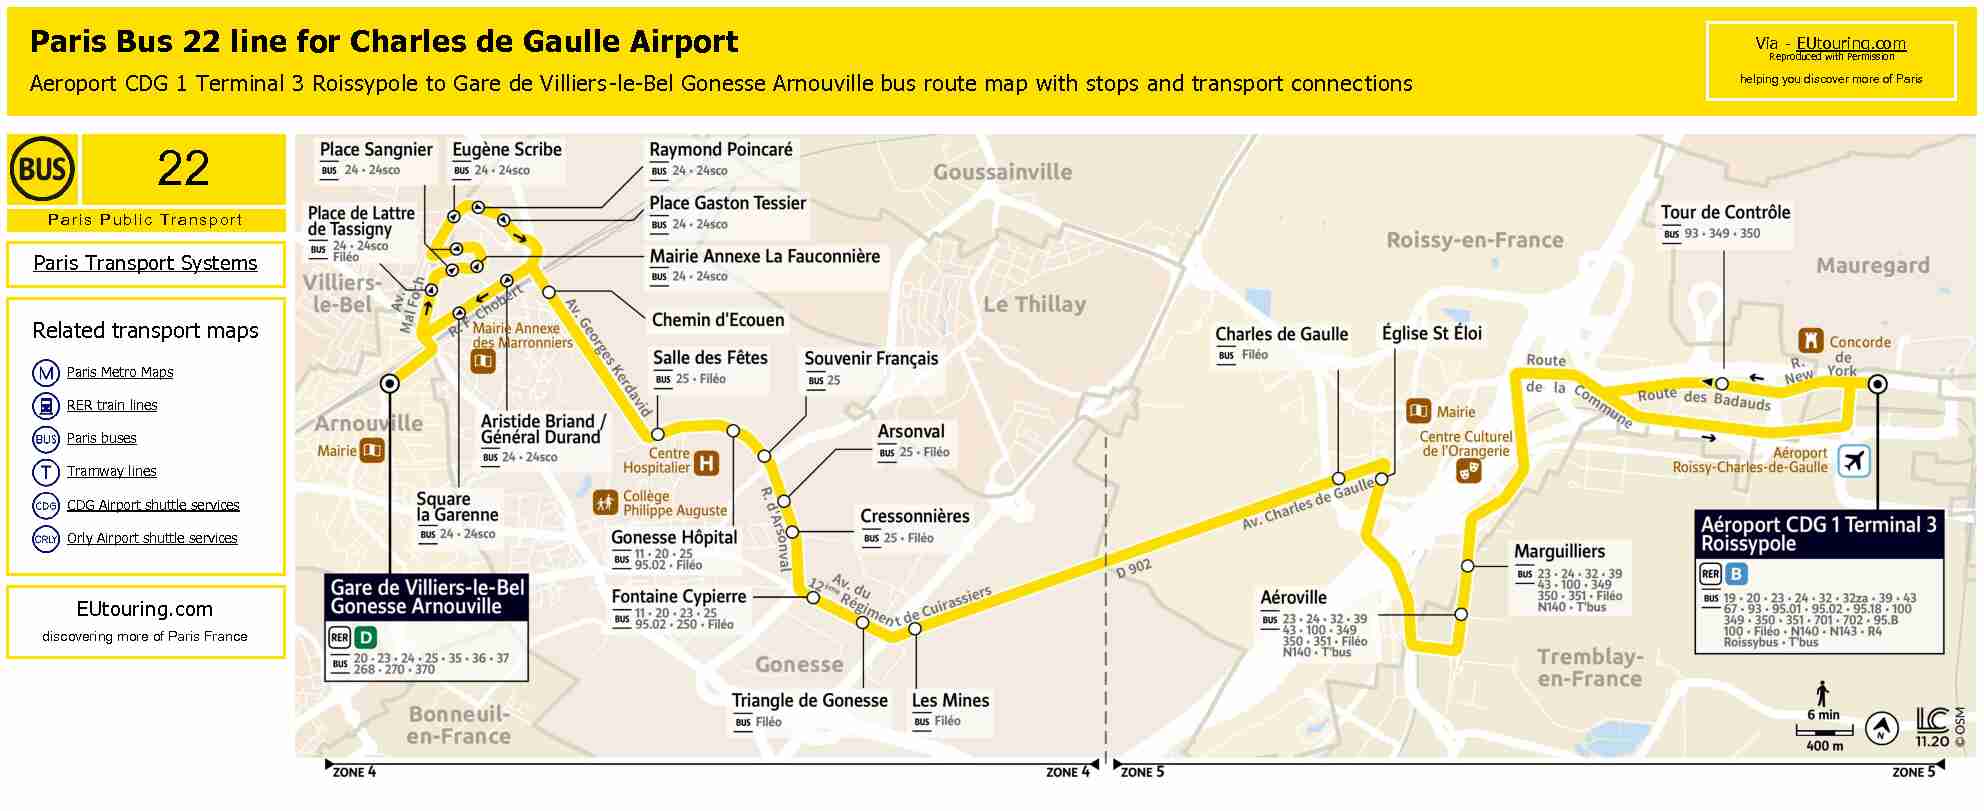 Paris Bus 22 map for CDG airport SQ - EUtouring.com